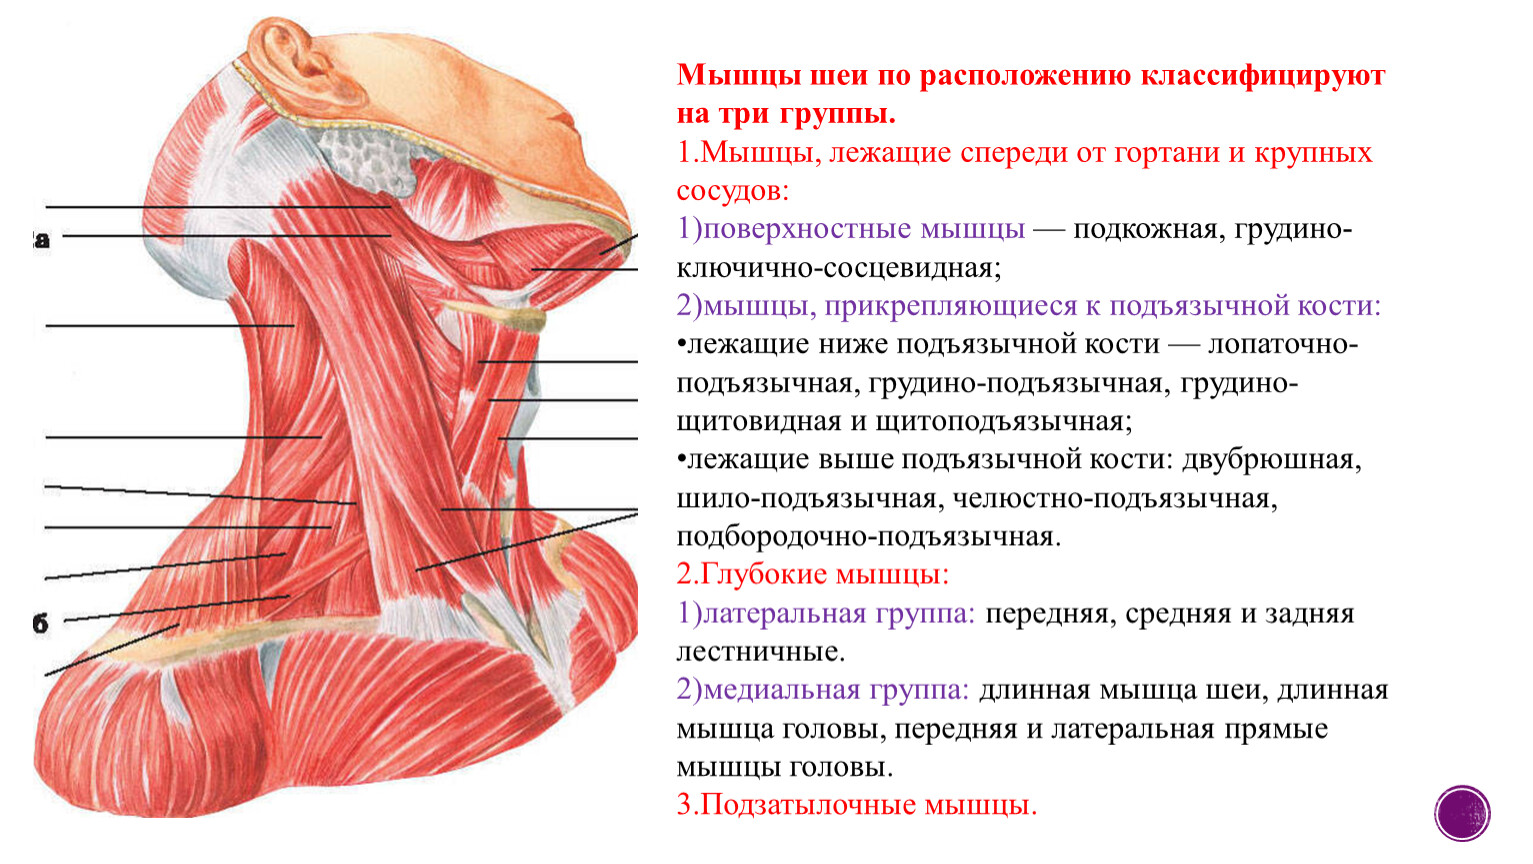 Мышцы шеи анатомия. Строение мышц шеи сзади. Строение мышц шеи человека сзади. Поверхностные мышцы шеи сзади. Мышцы шеи и головы анатомия сзади.